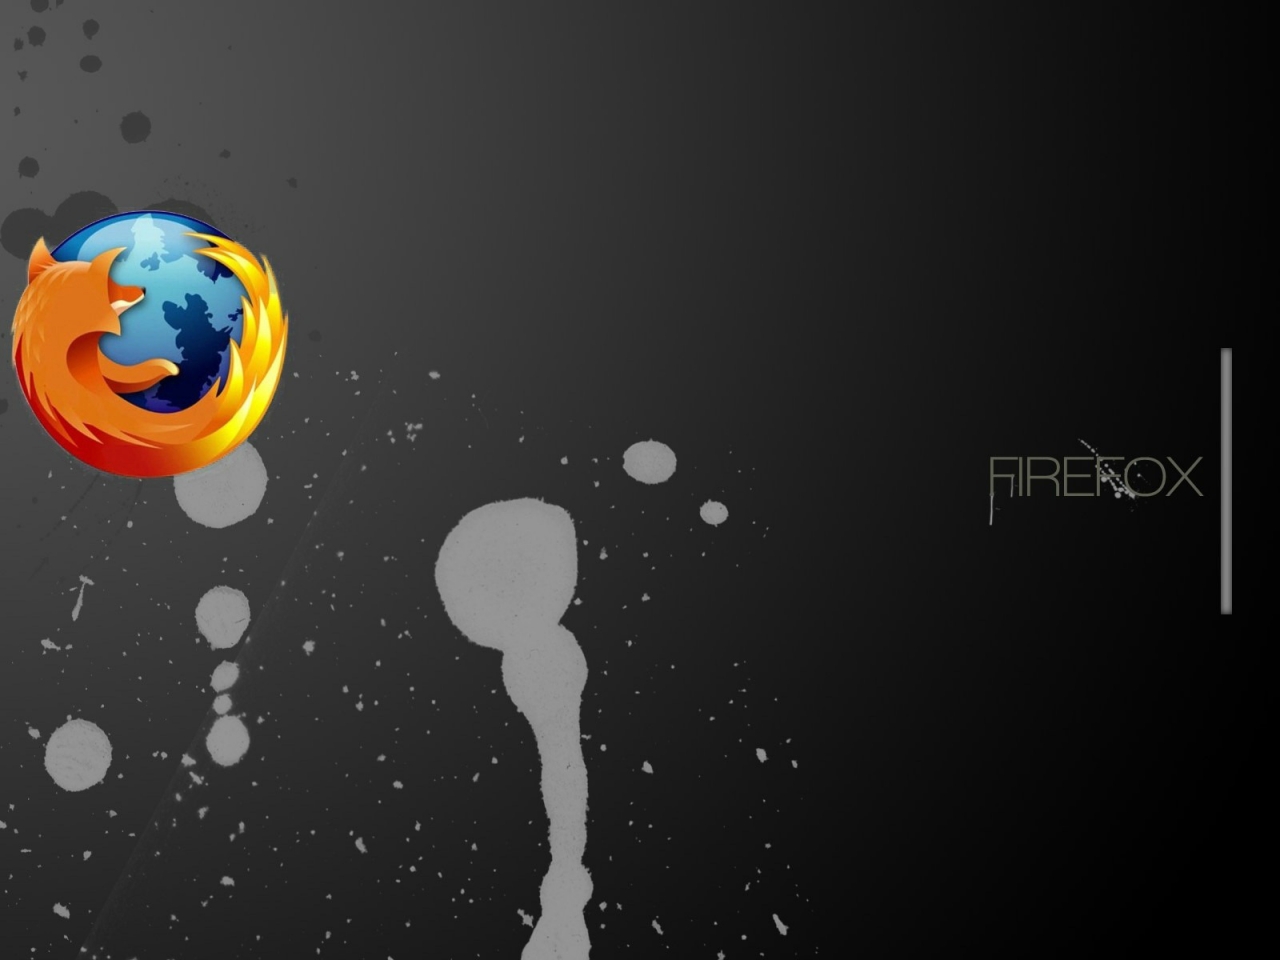 Firefox Splash for 1280 x 960 resolution